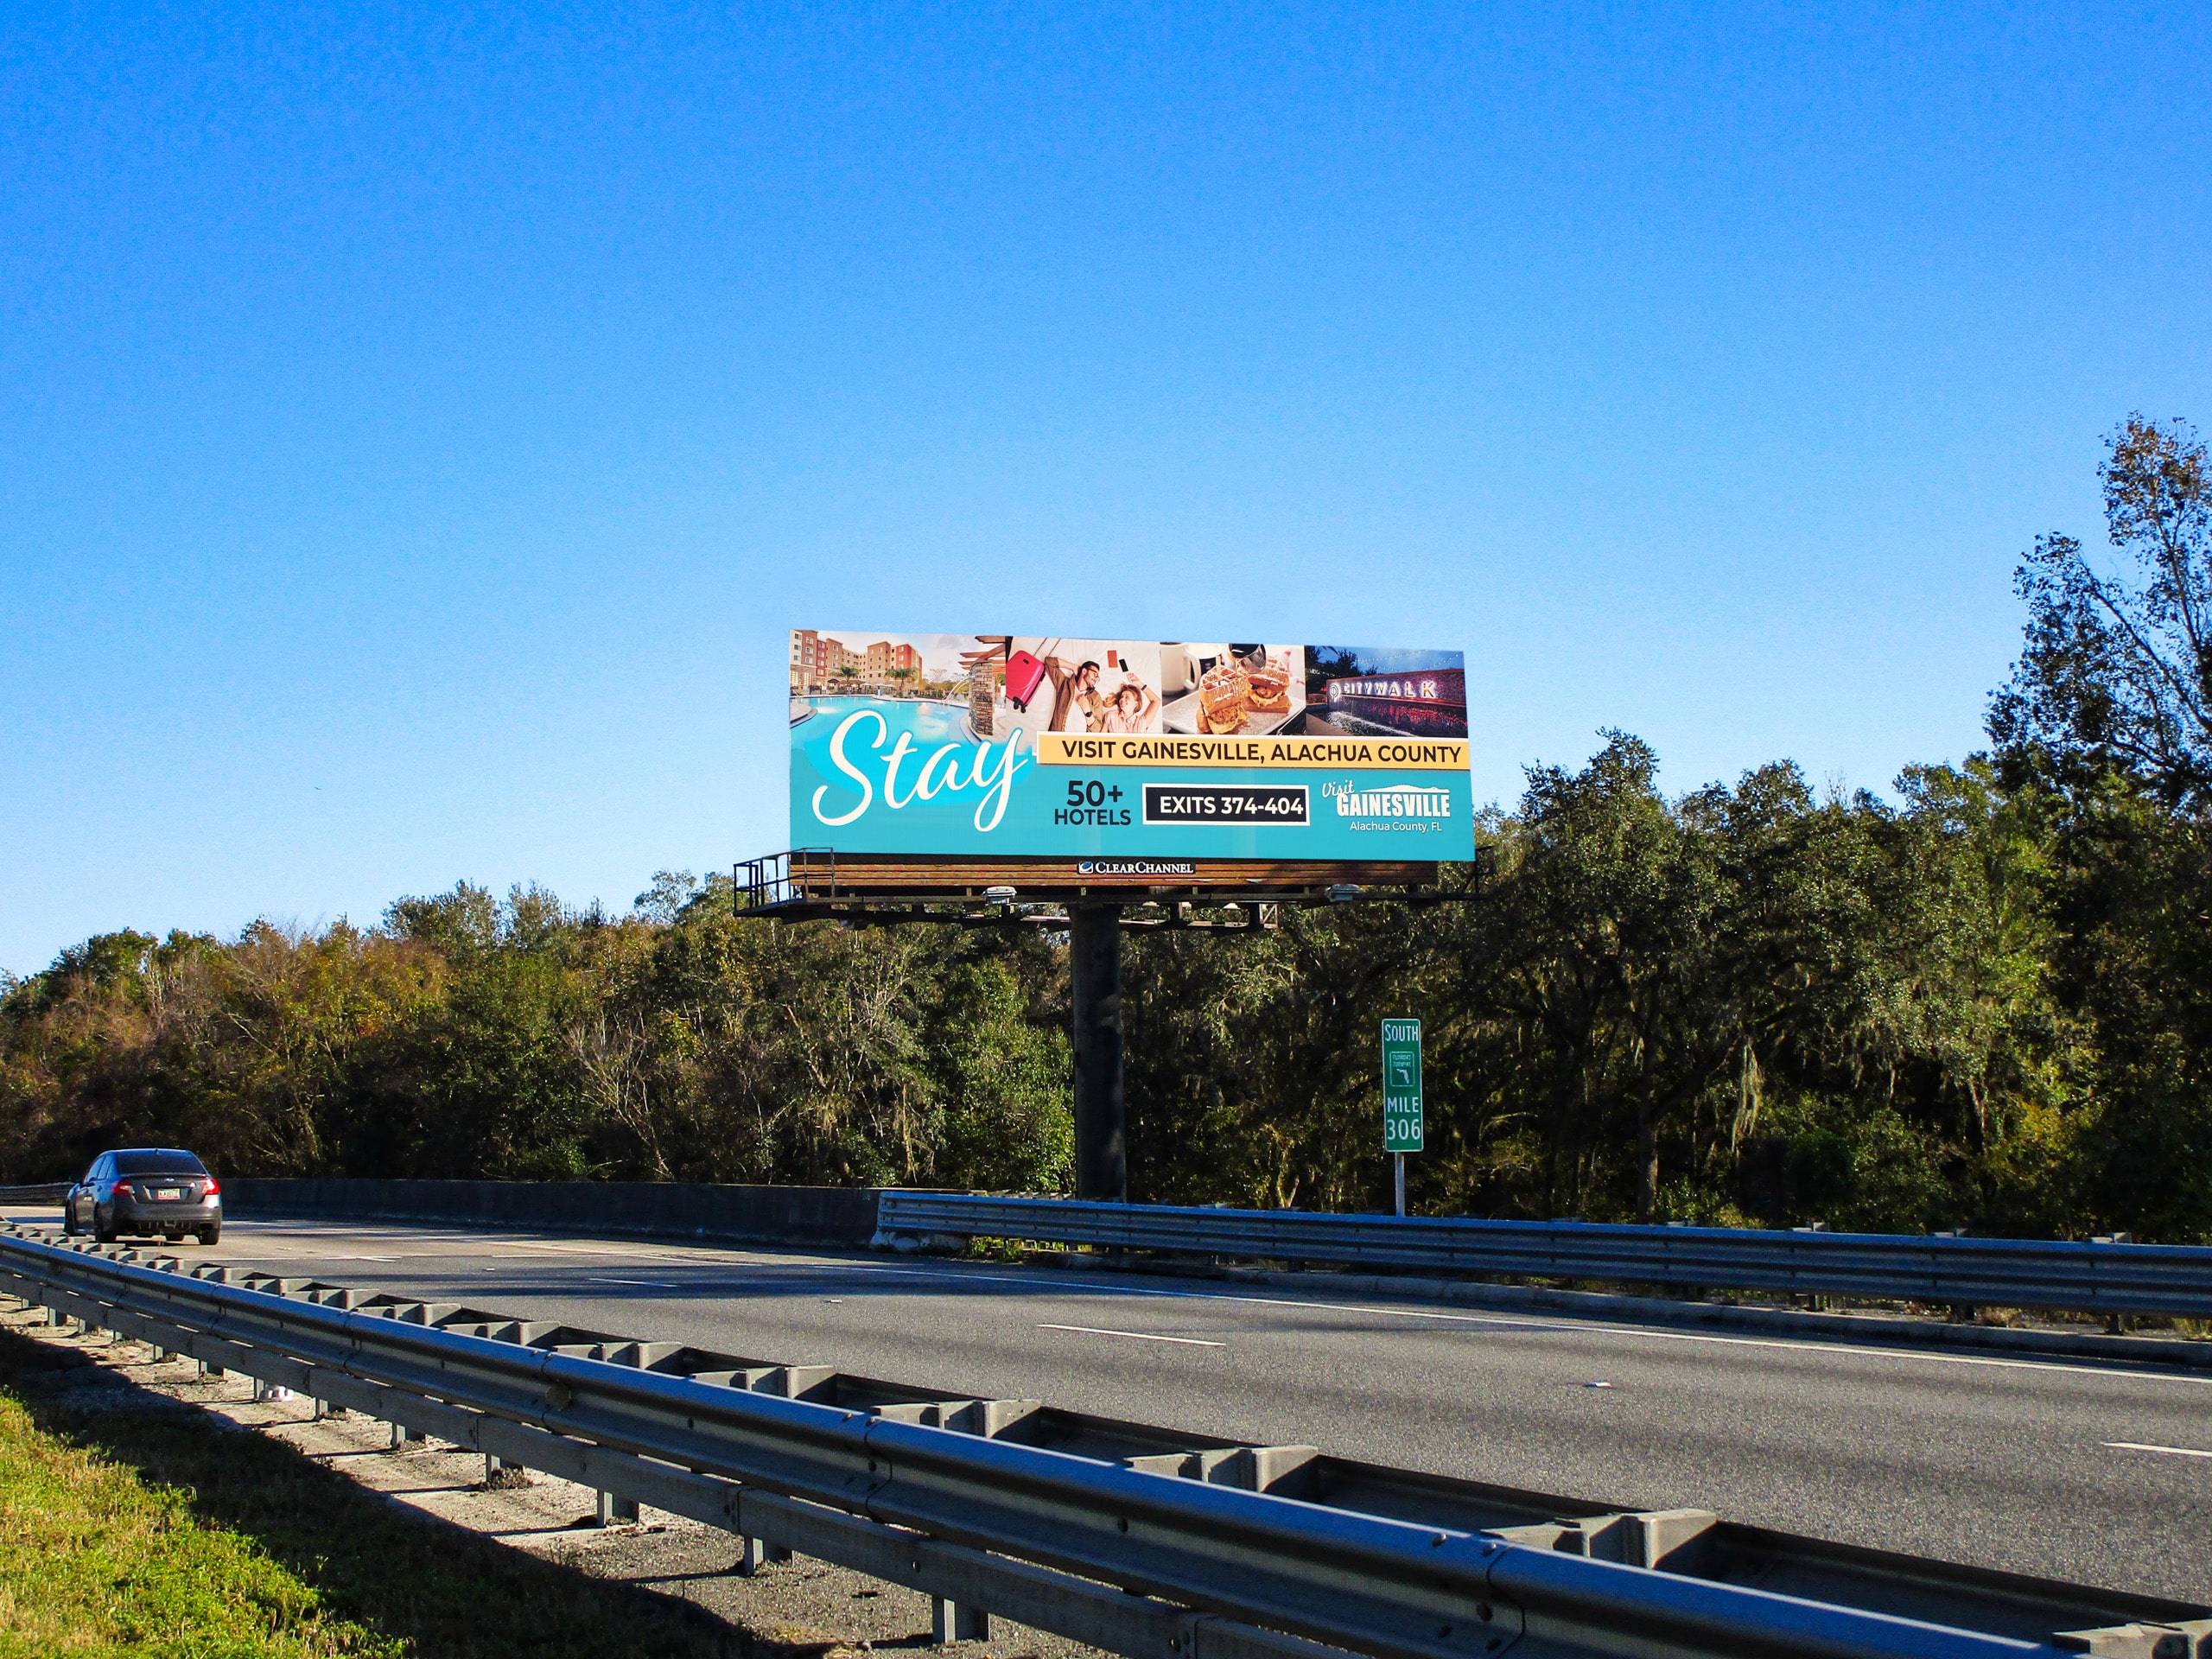 travel billboard advertising